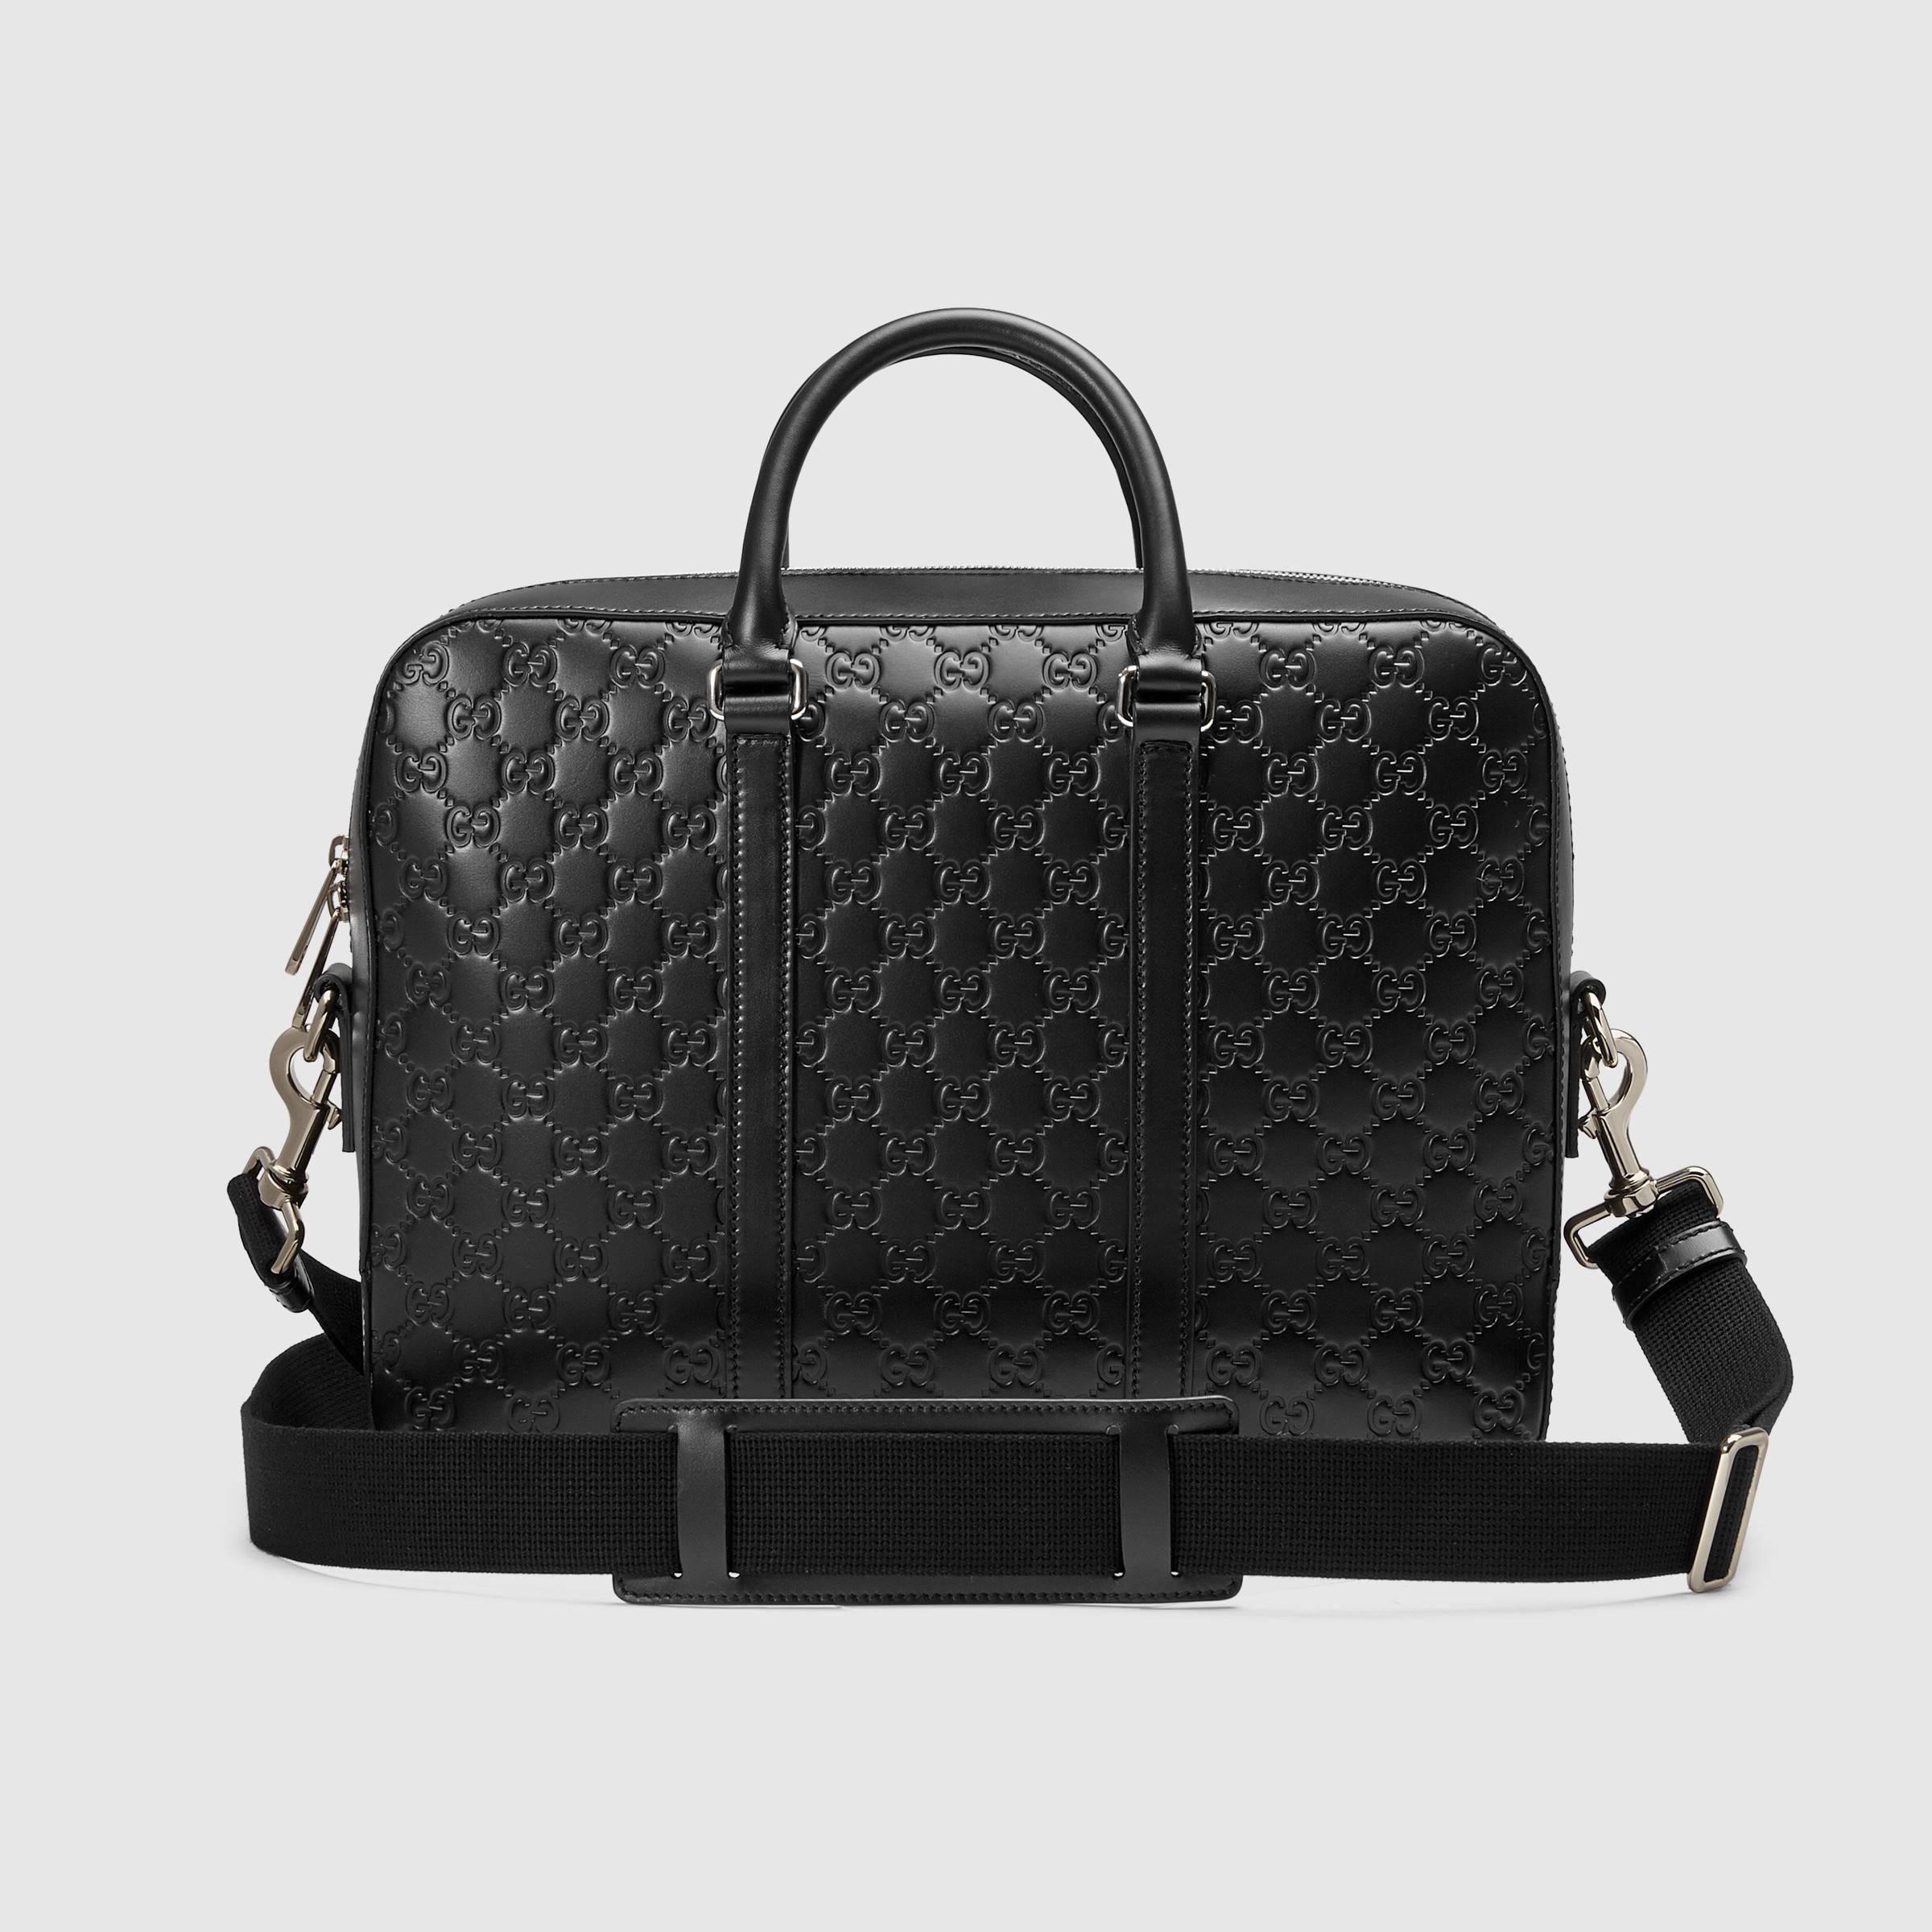 Gucci Signature Leather Briefcase in Black | Lyst